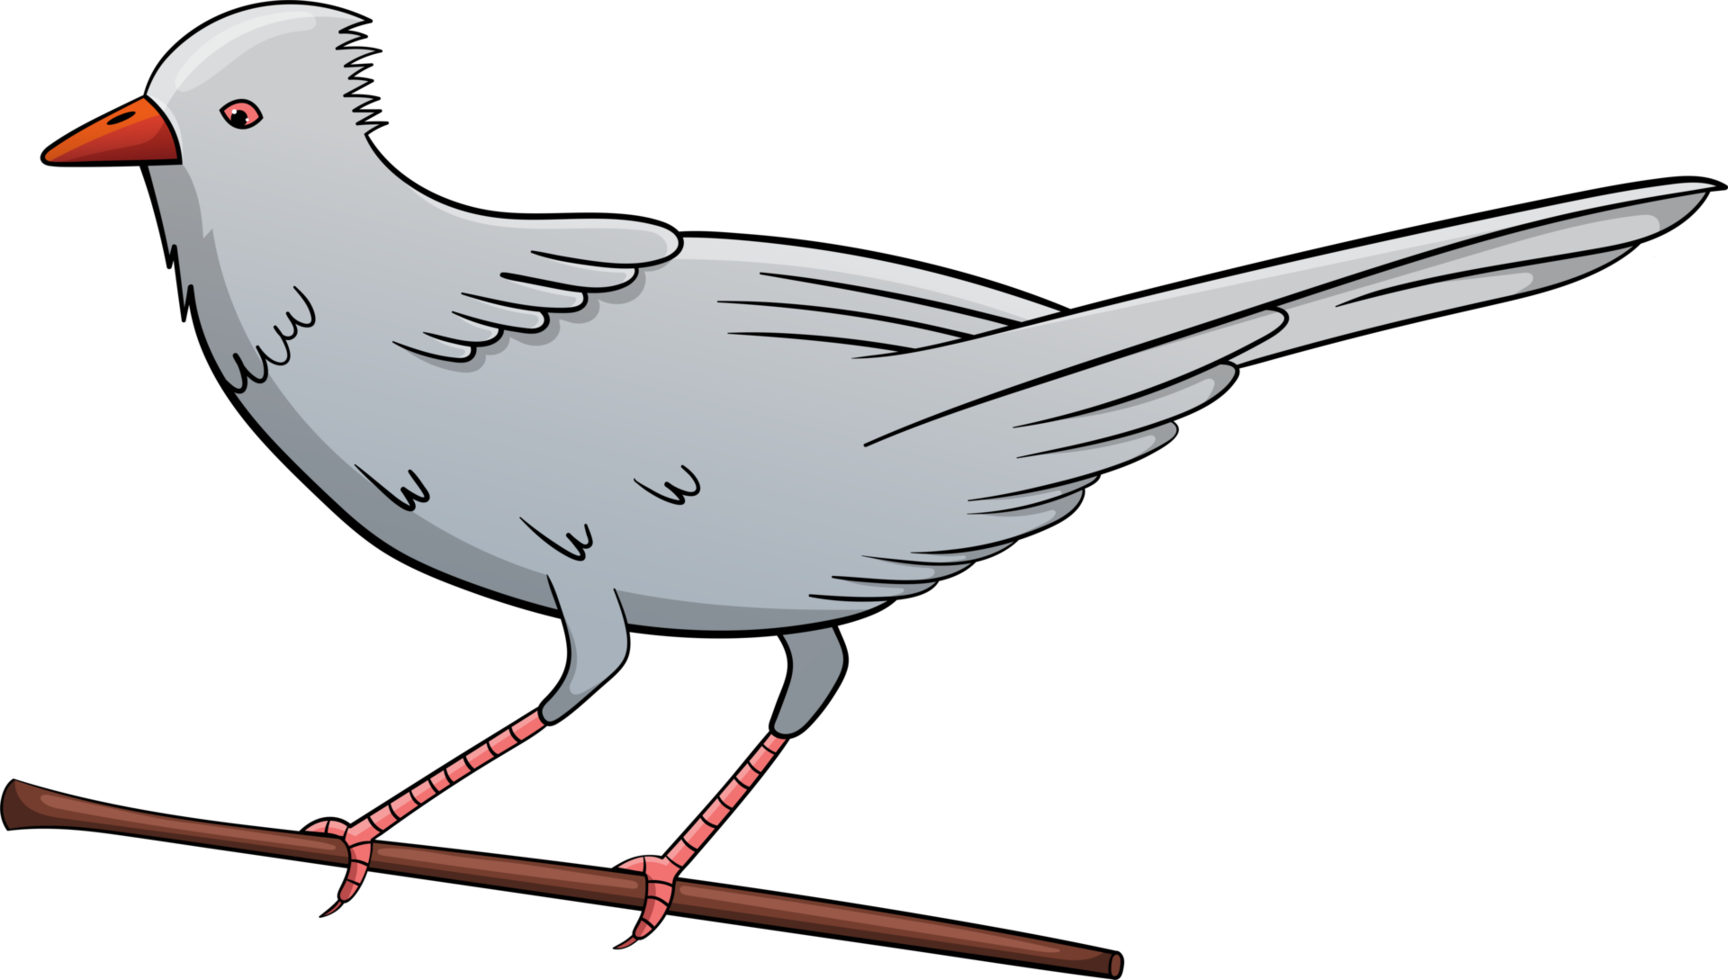 illustrazione di progettazione di clipart di uccelli png